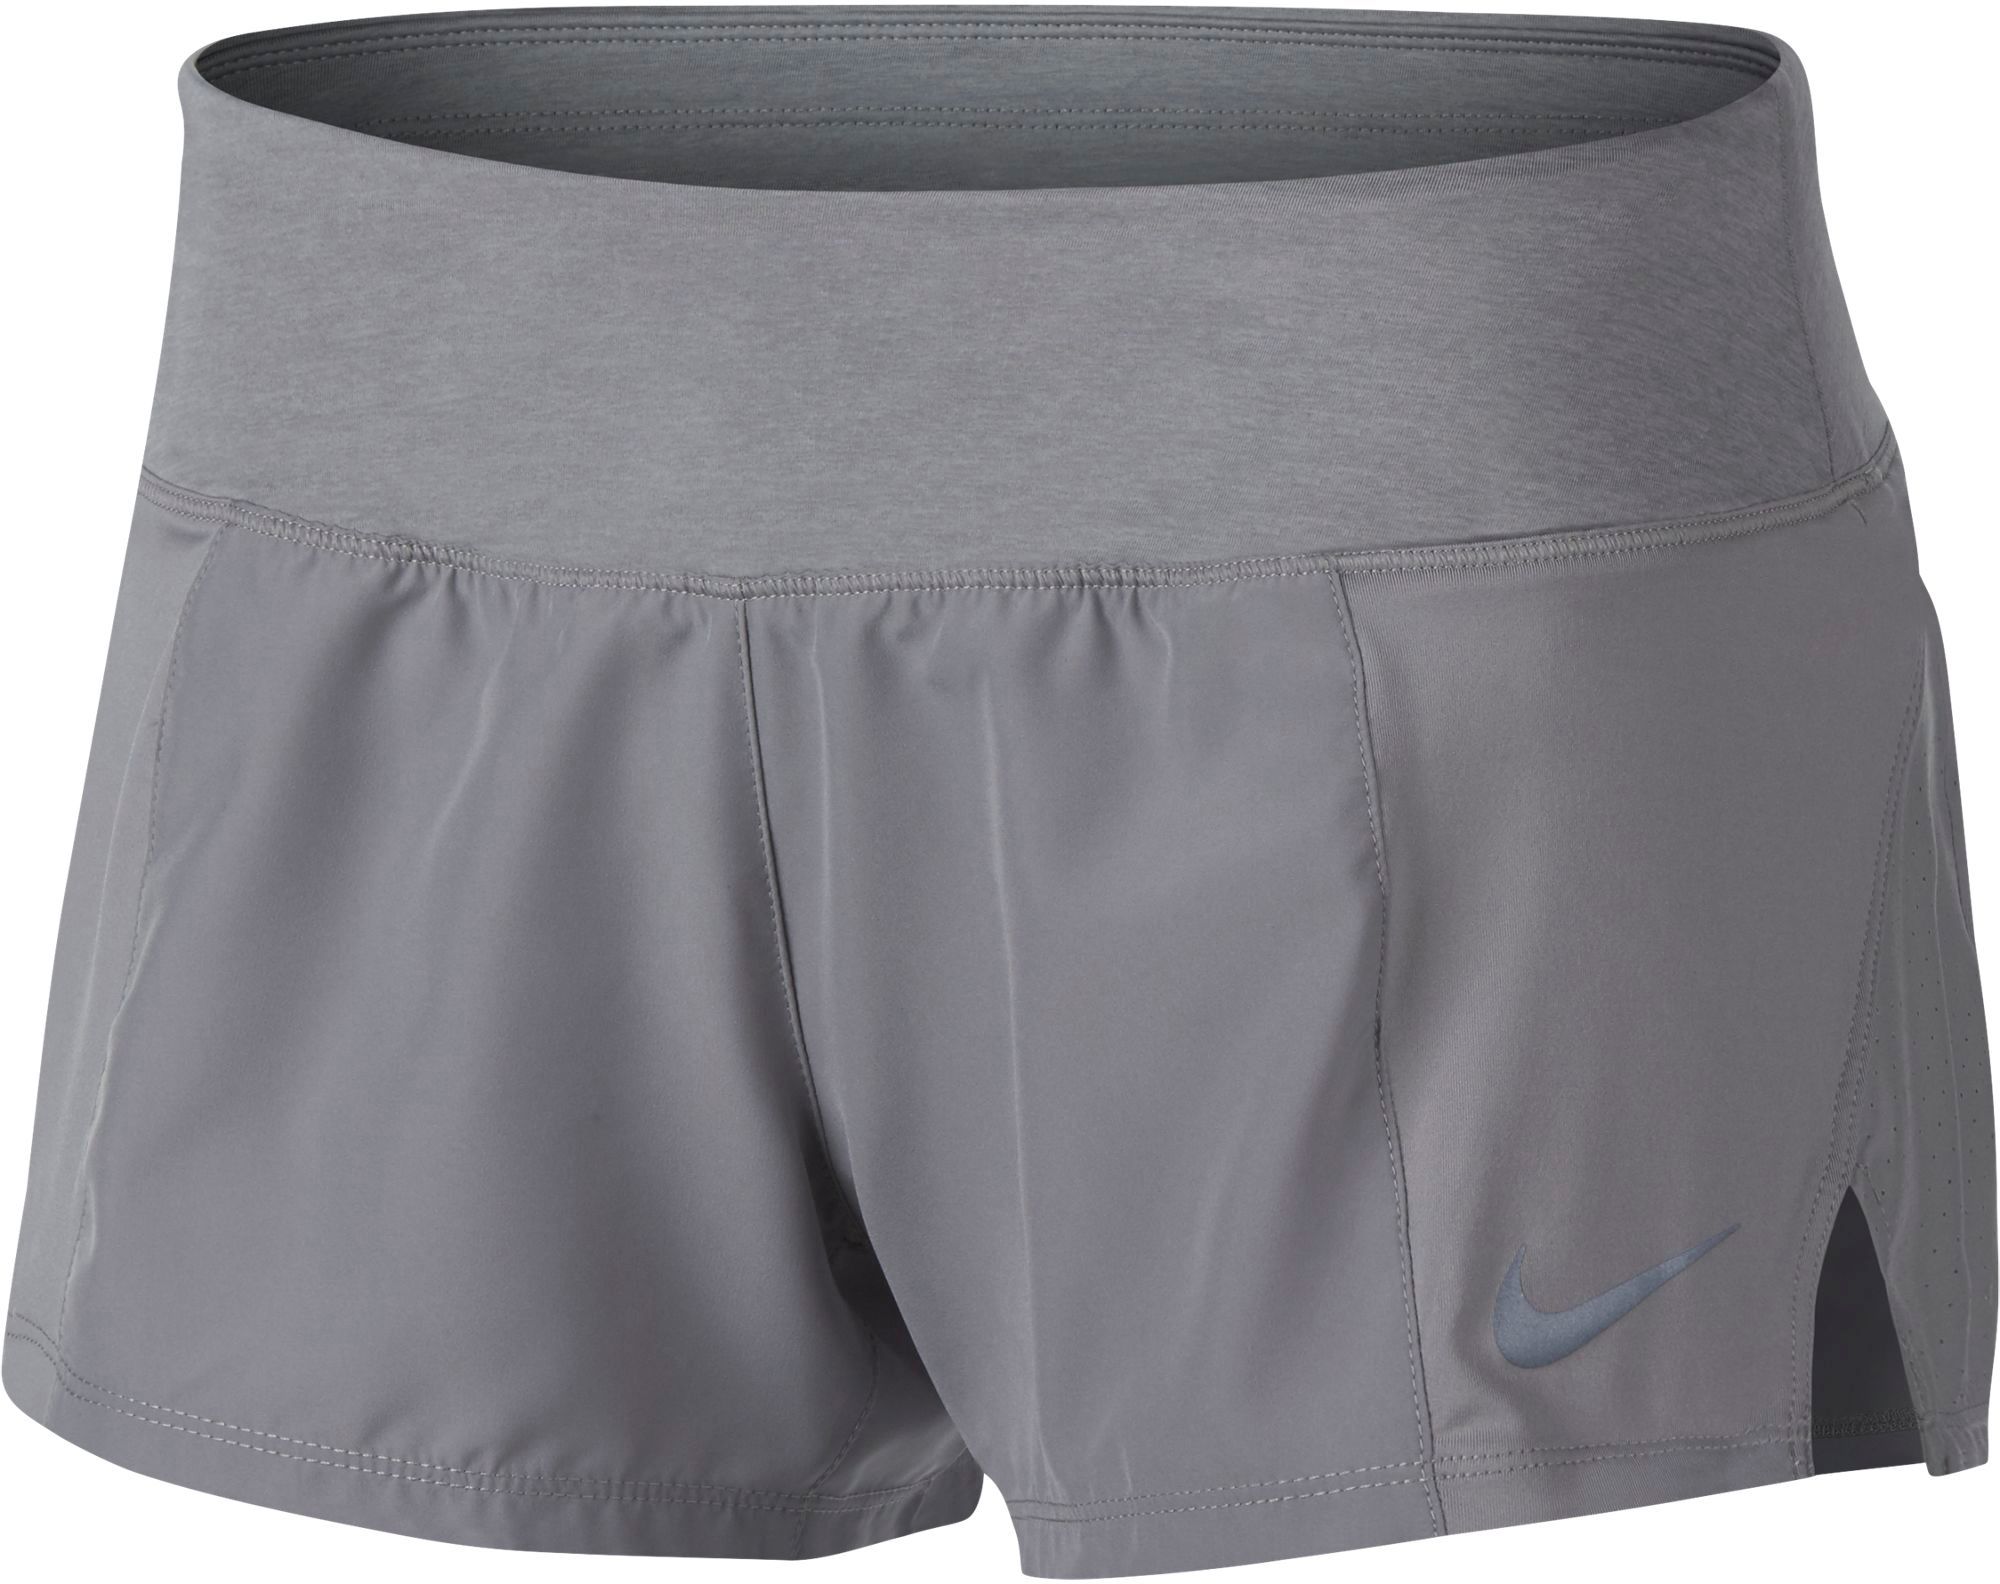 nike 3 inch dry running shorts